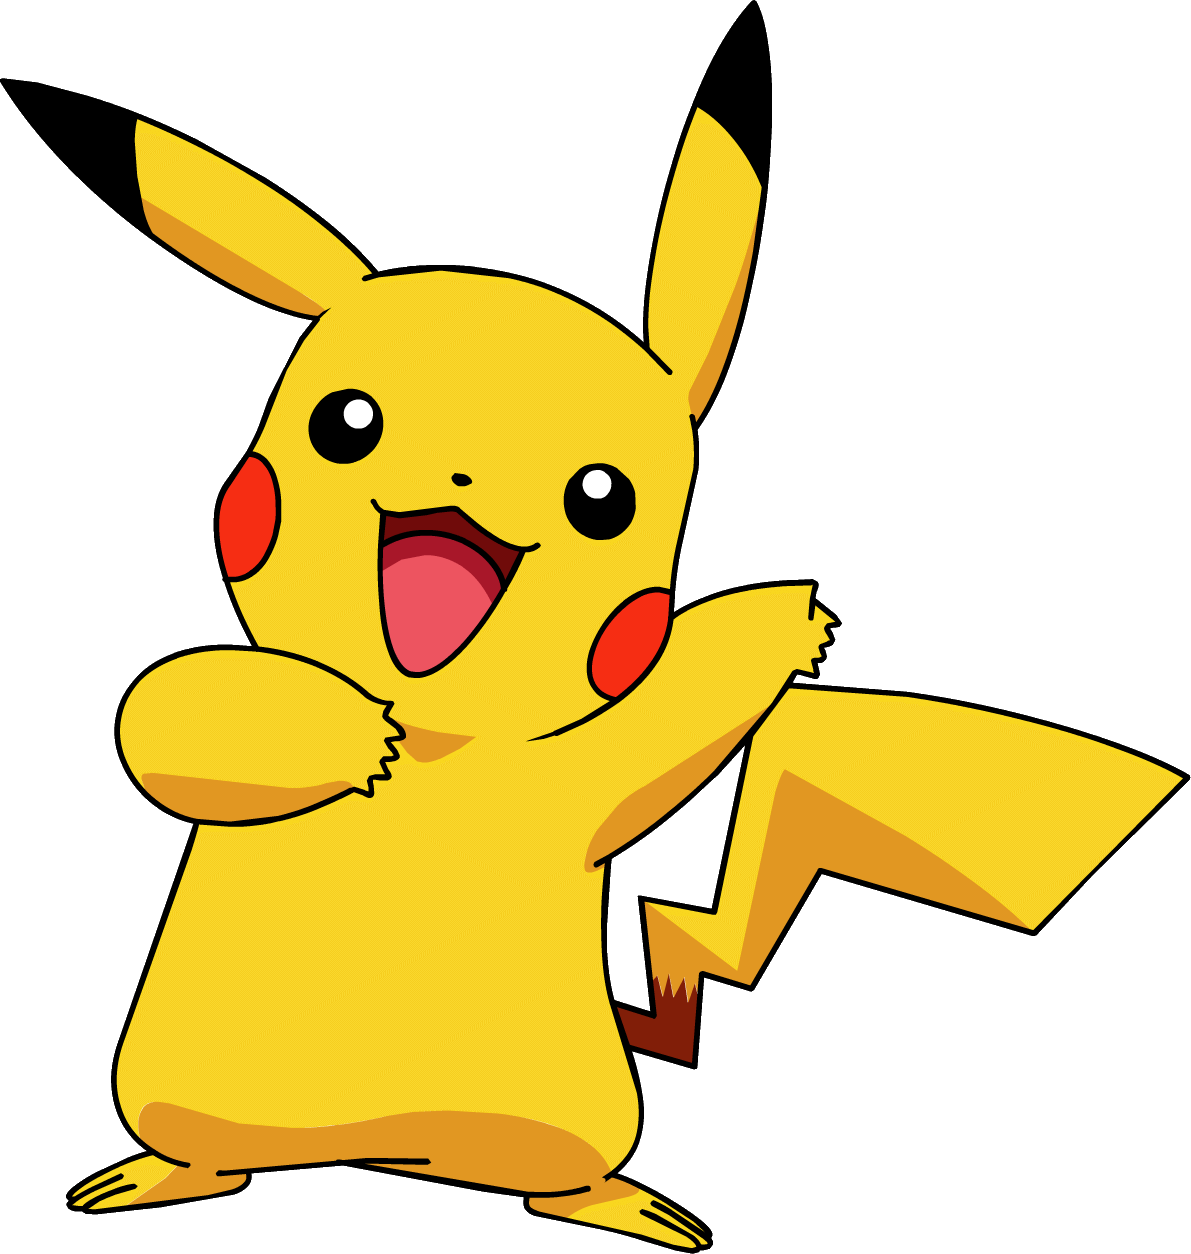 Pikachu Pokemon PNG images